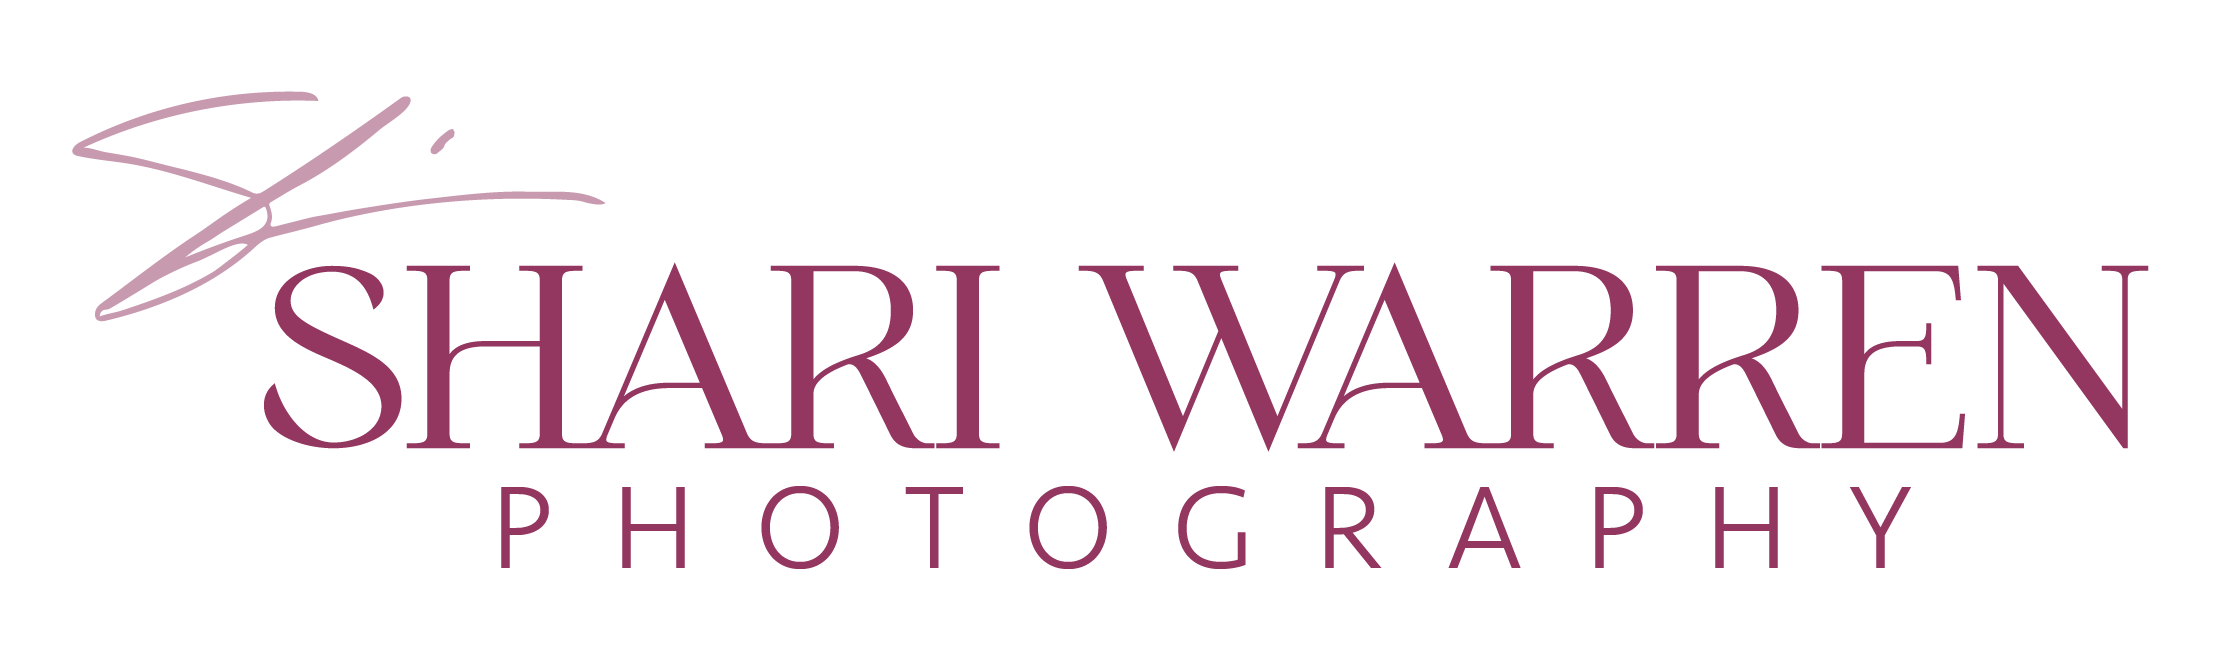 Shari Warren Photography - Artist Website